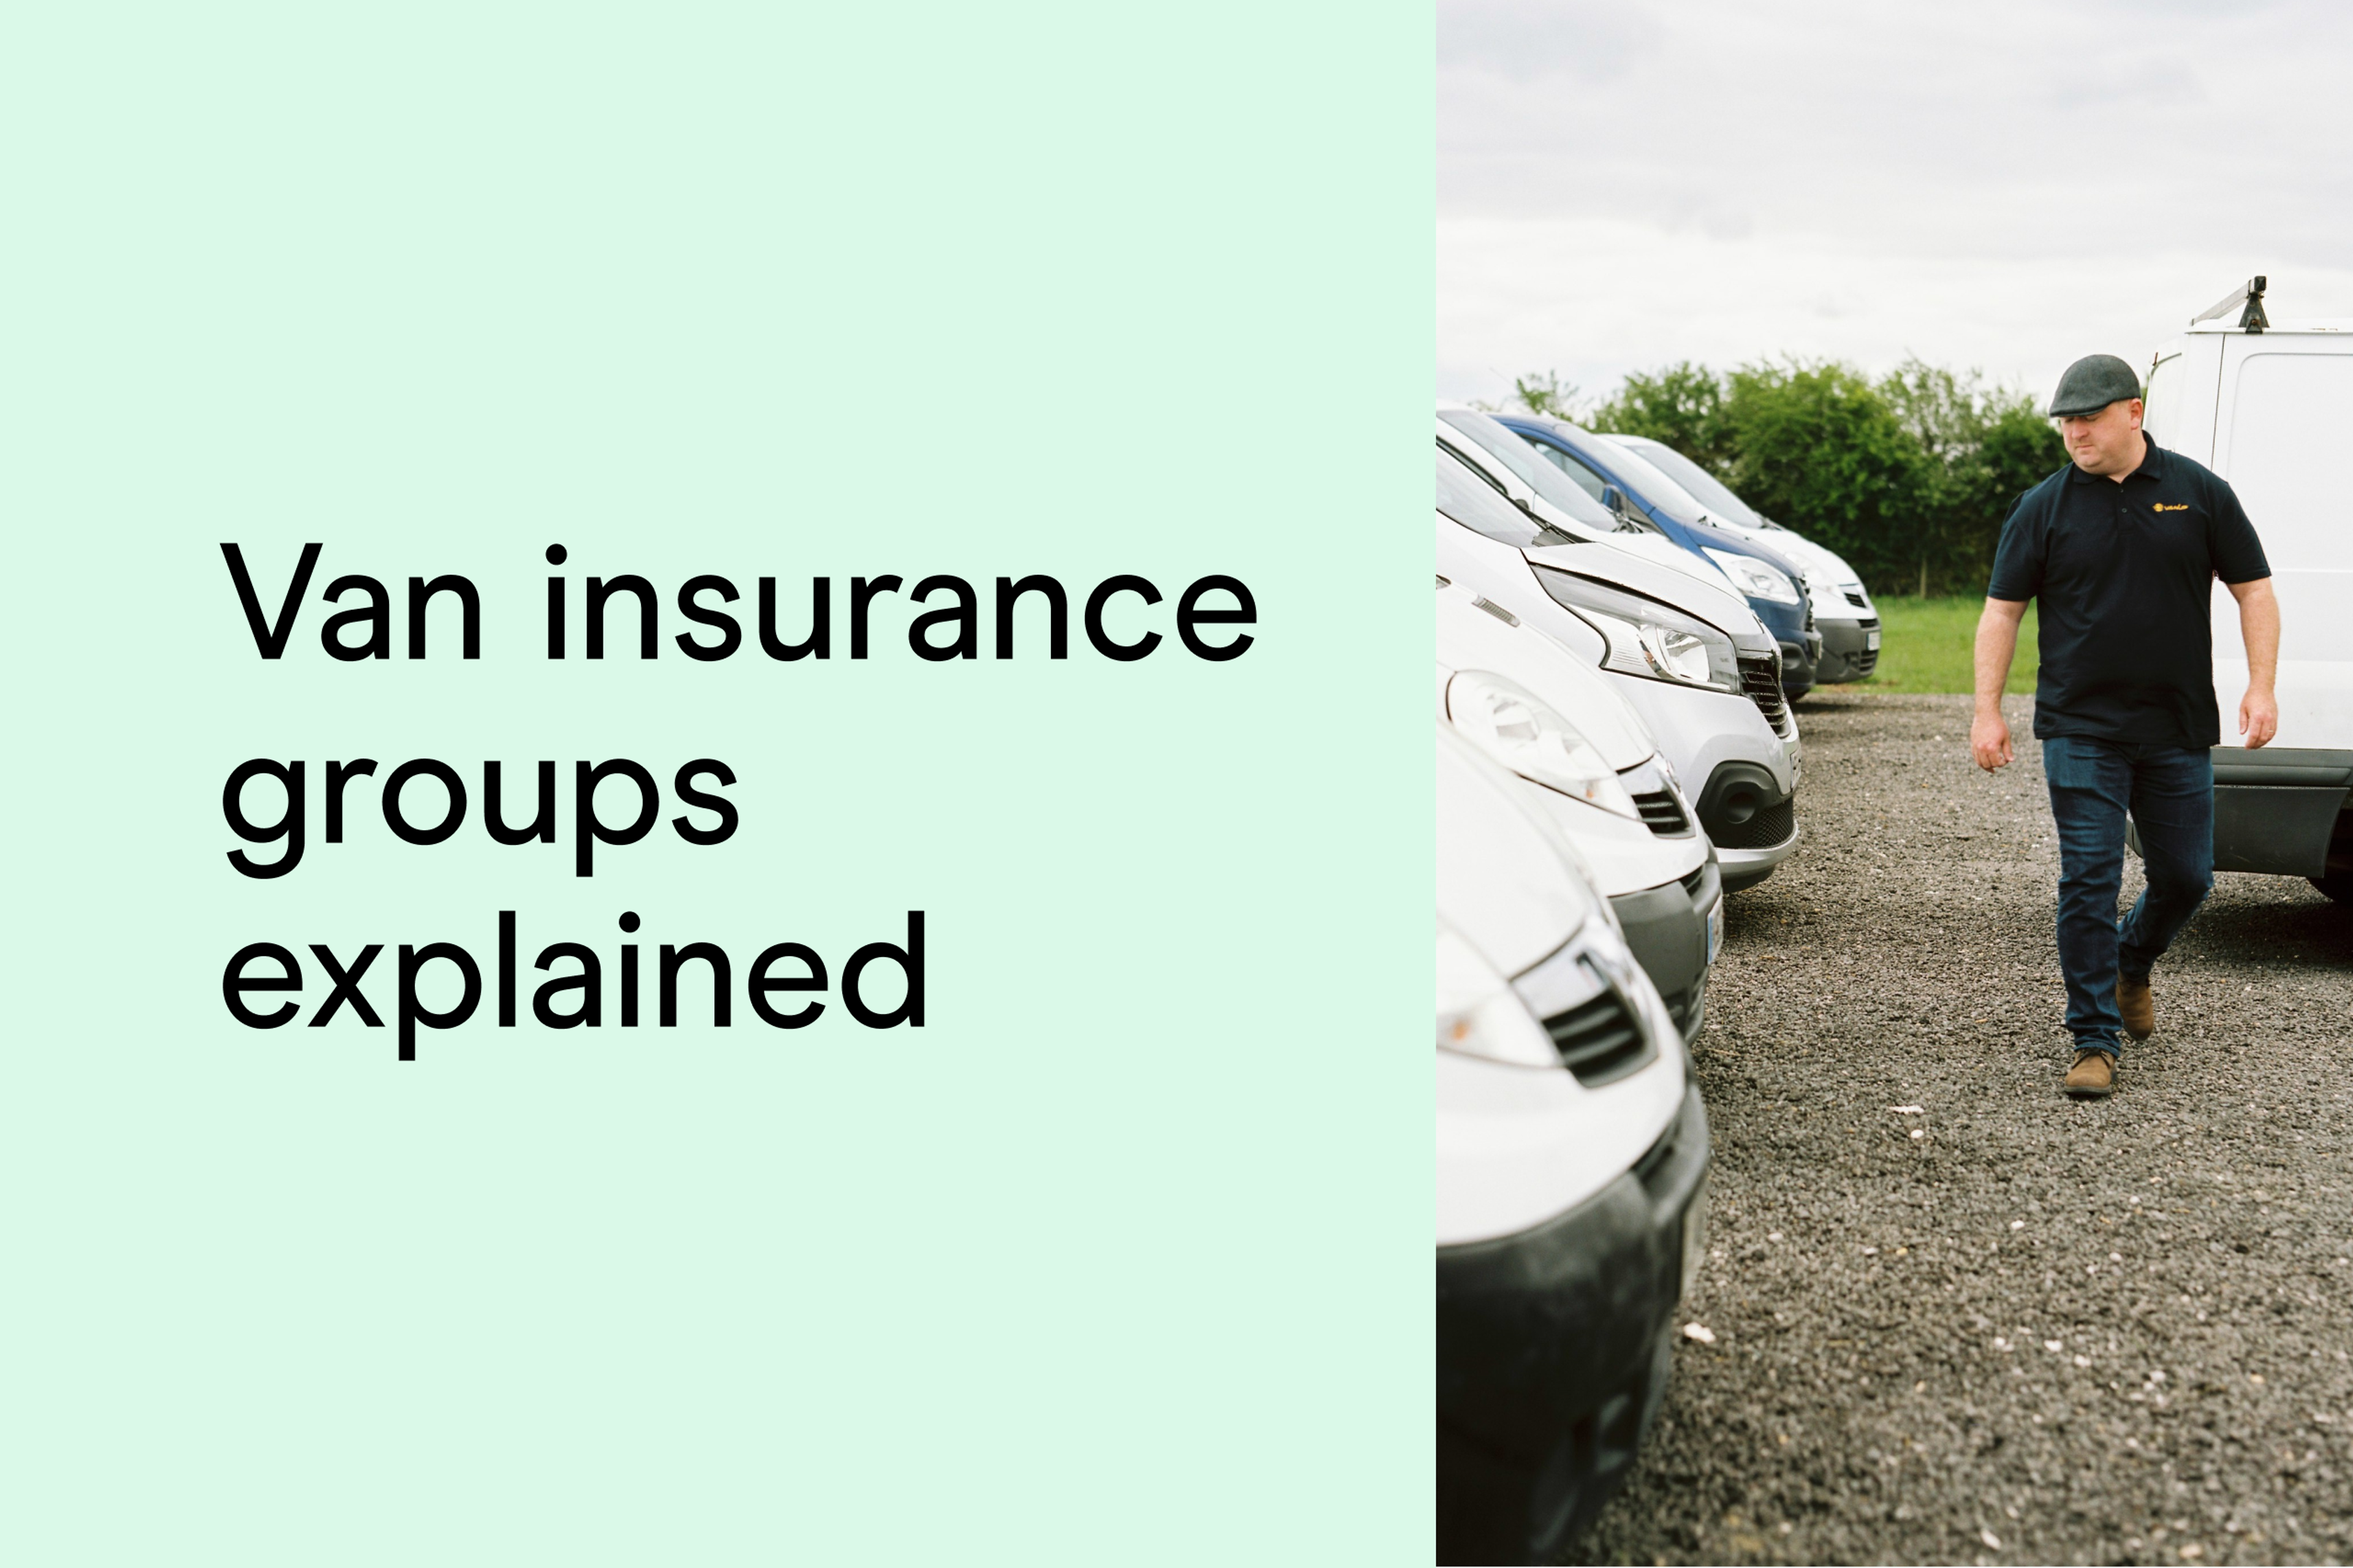 van insurance groups featured image